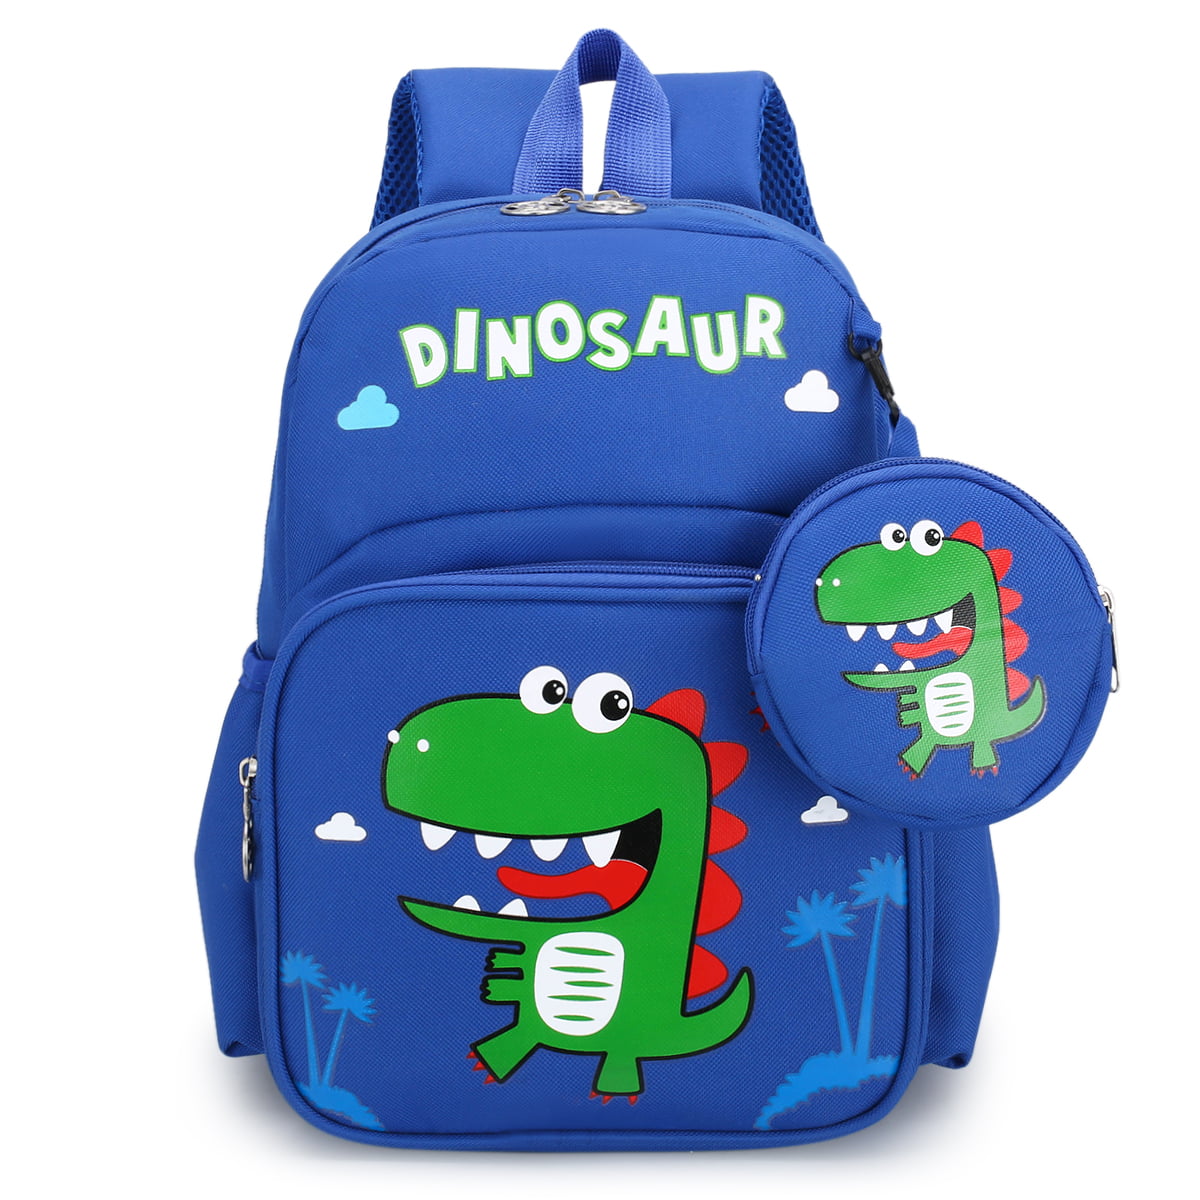 JFIDSJ 16-inch Schoolbag Orthopedic Backpack Childrens School boy Cartoon Schoolbag Camping Travel Hiking School 